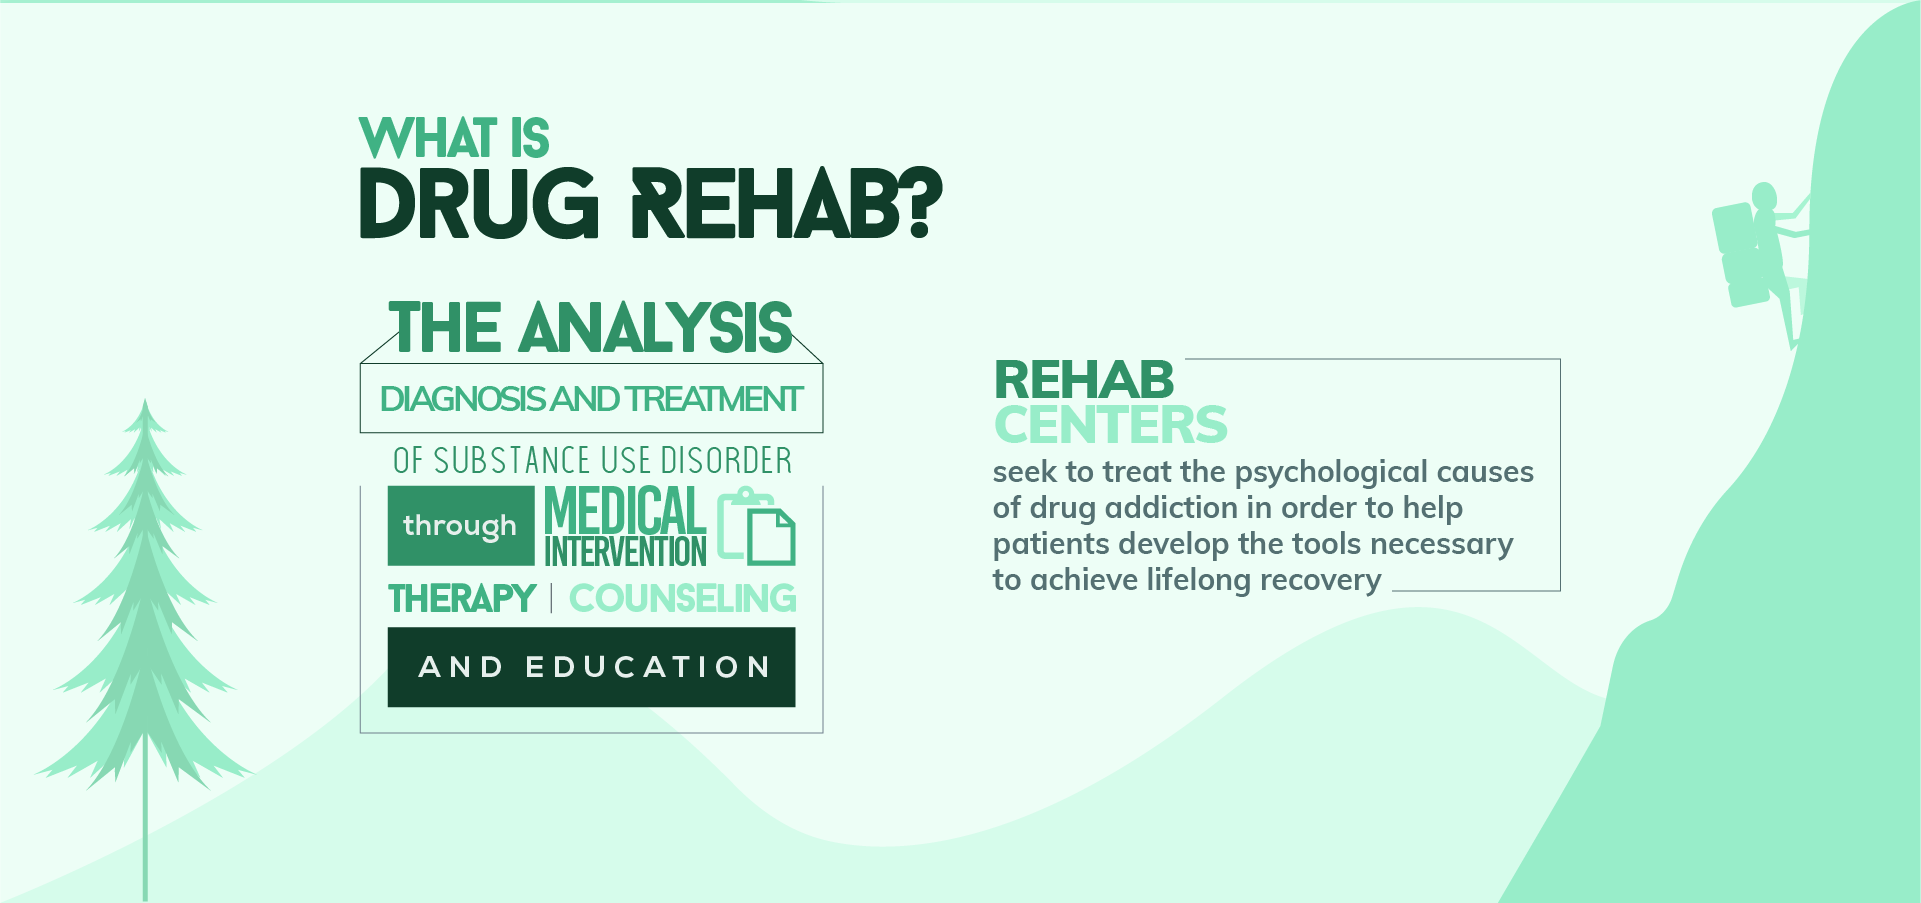 What is Drug Rehab?